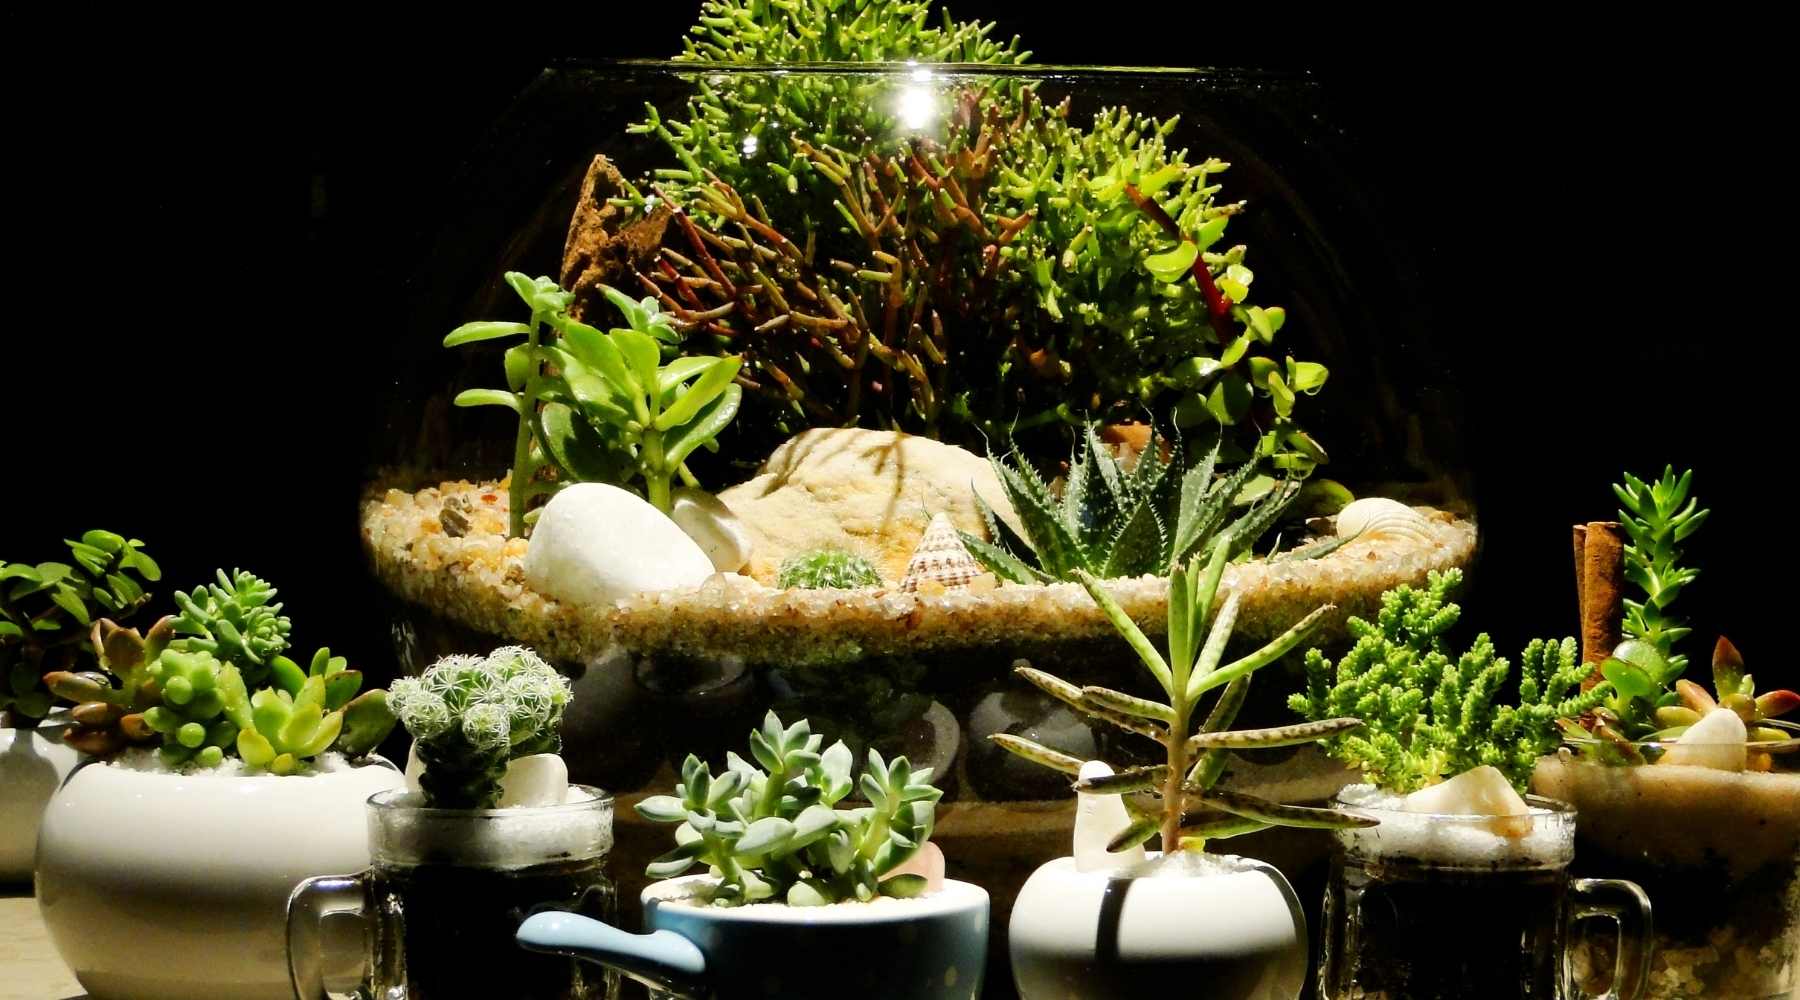 Open Terrarium 101: The Best Plants, Projects & Care Tips